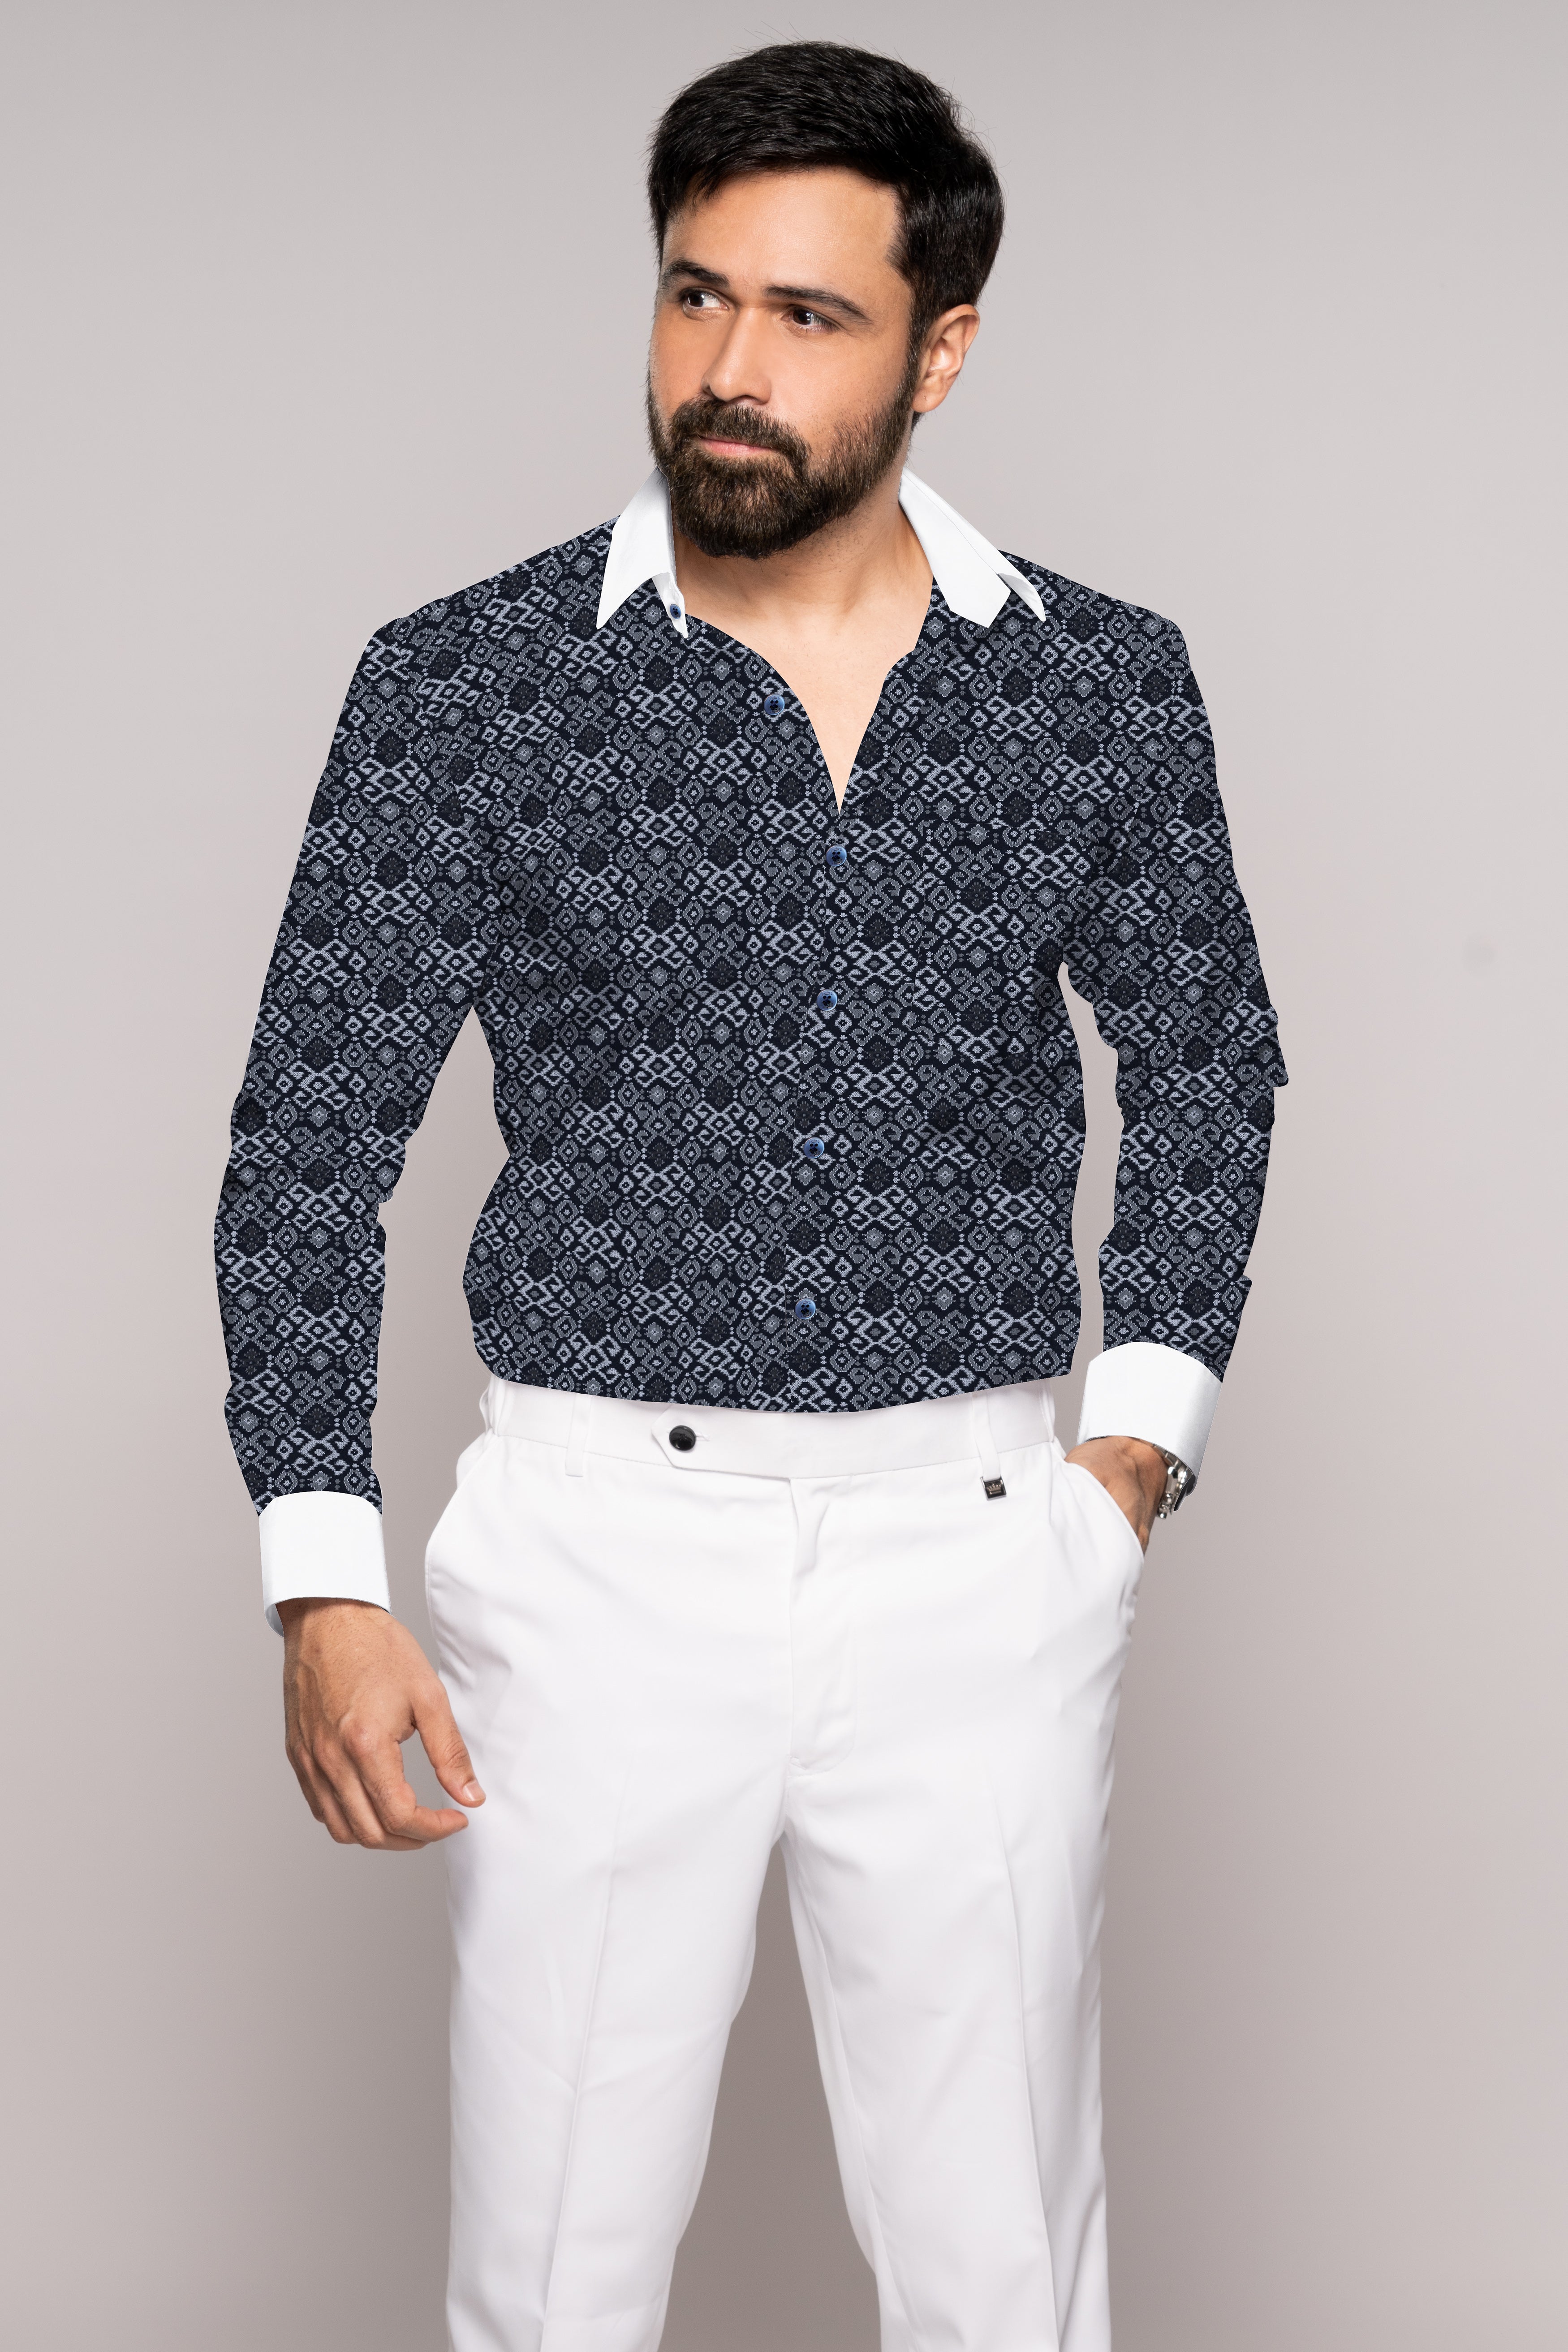 Haiti Navy Blue Printed with White Cuffs and Collar Super Soft Premium Cotton Shirt